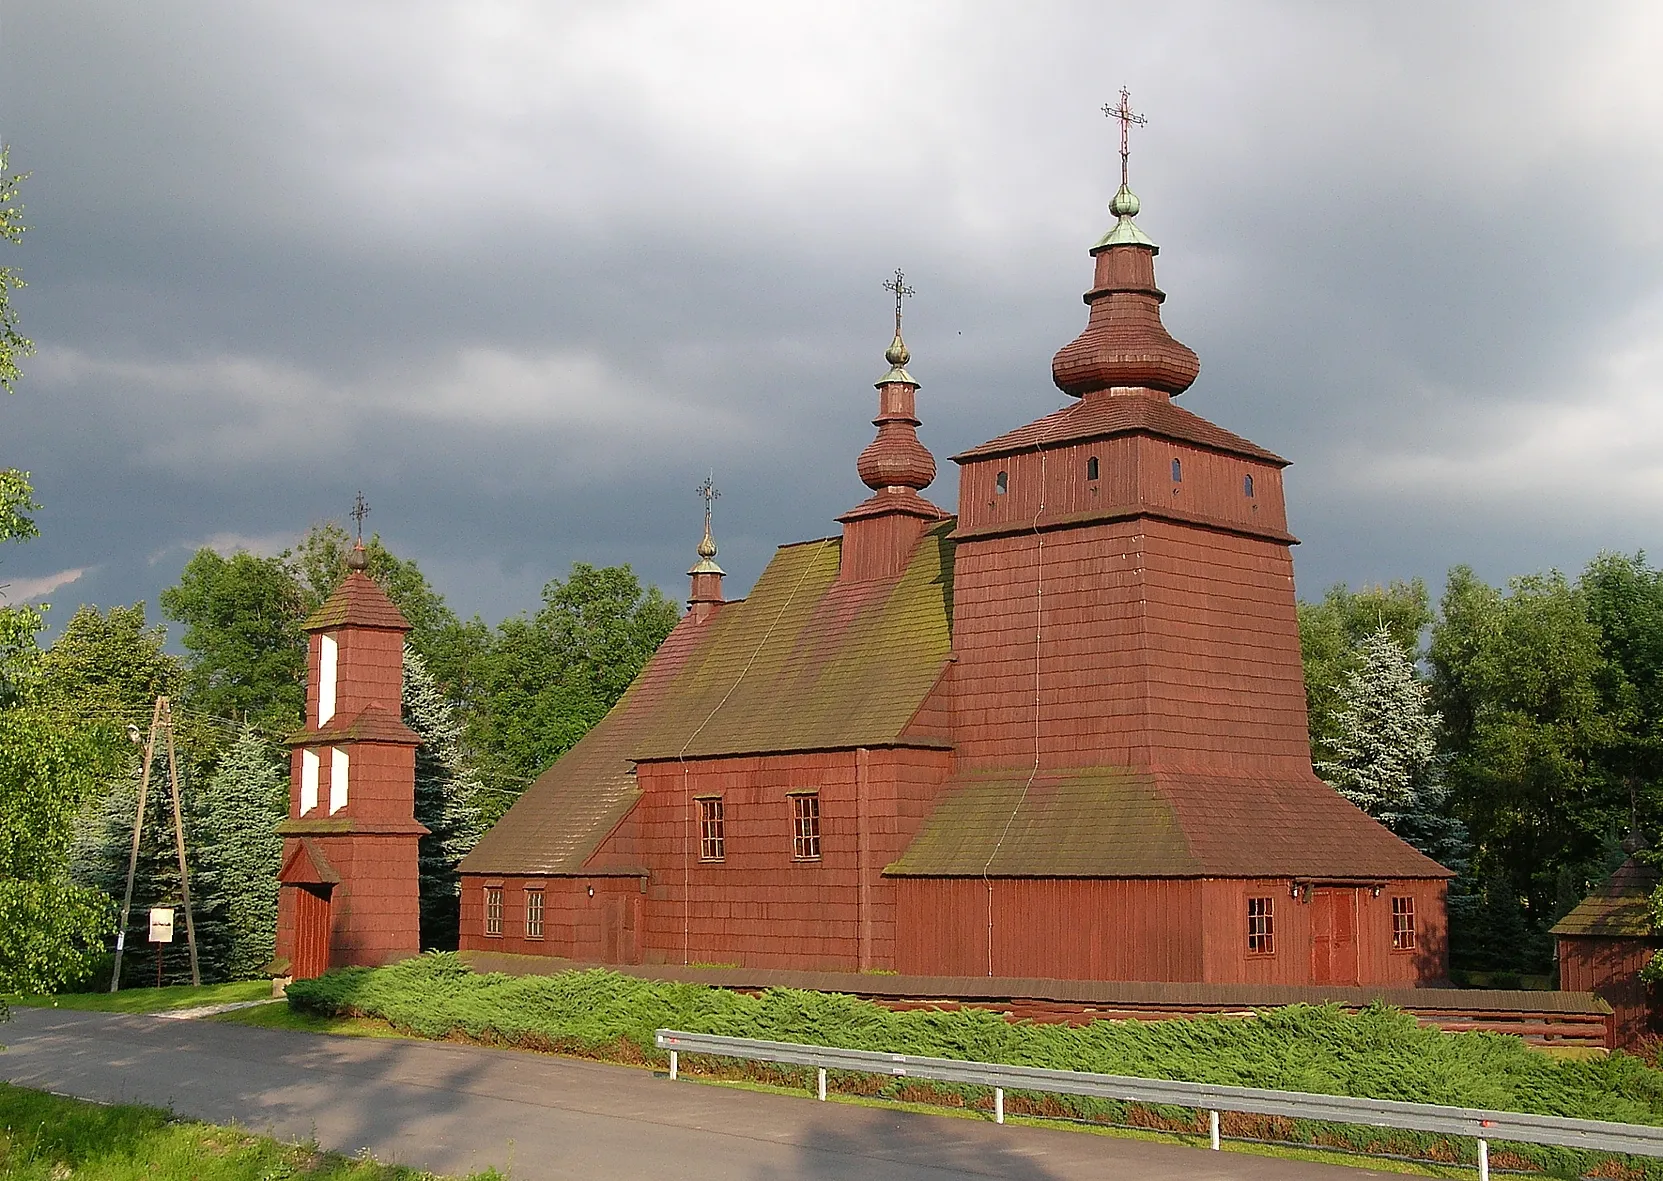 Photo showing: Wooden church in Męcina Wielka